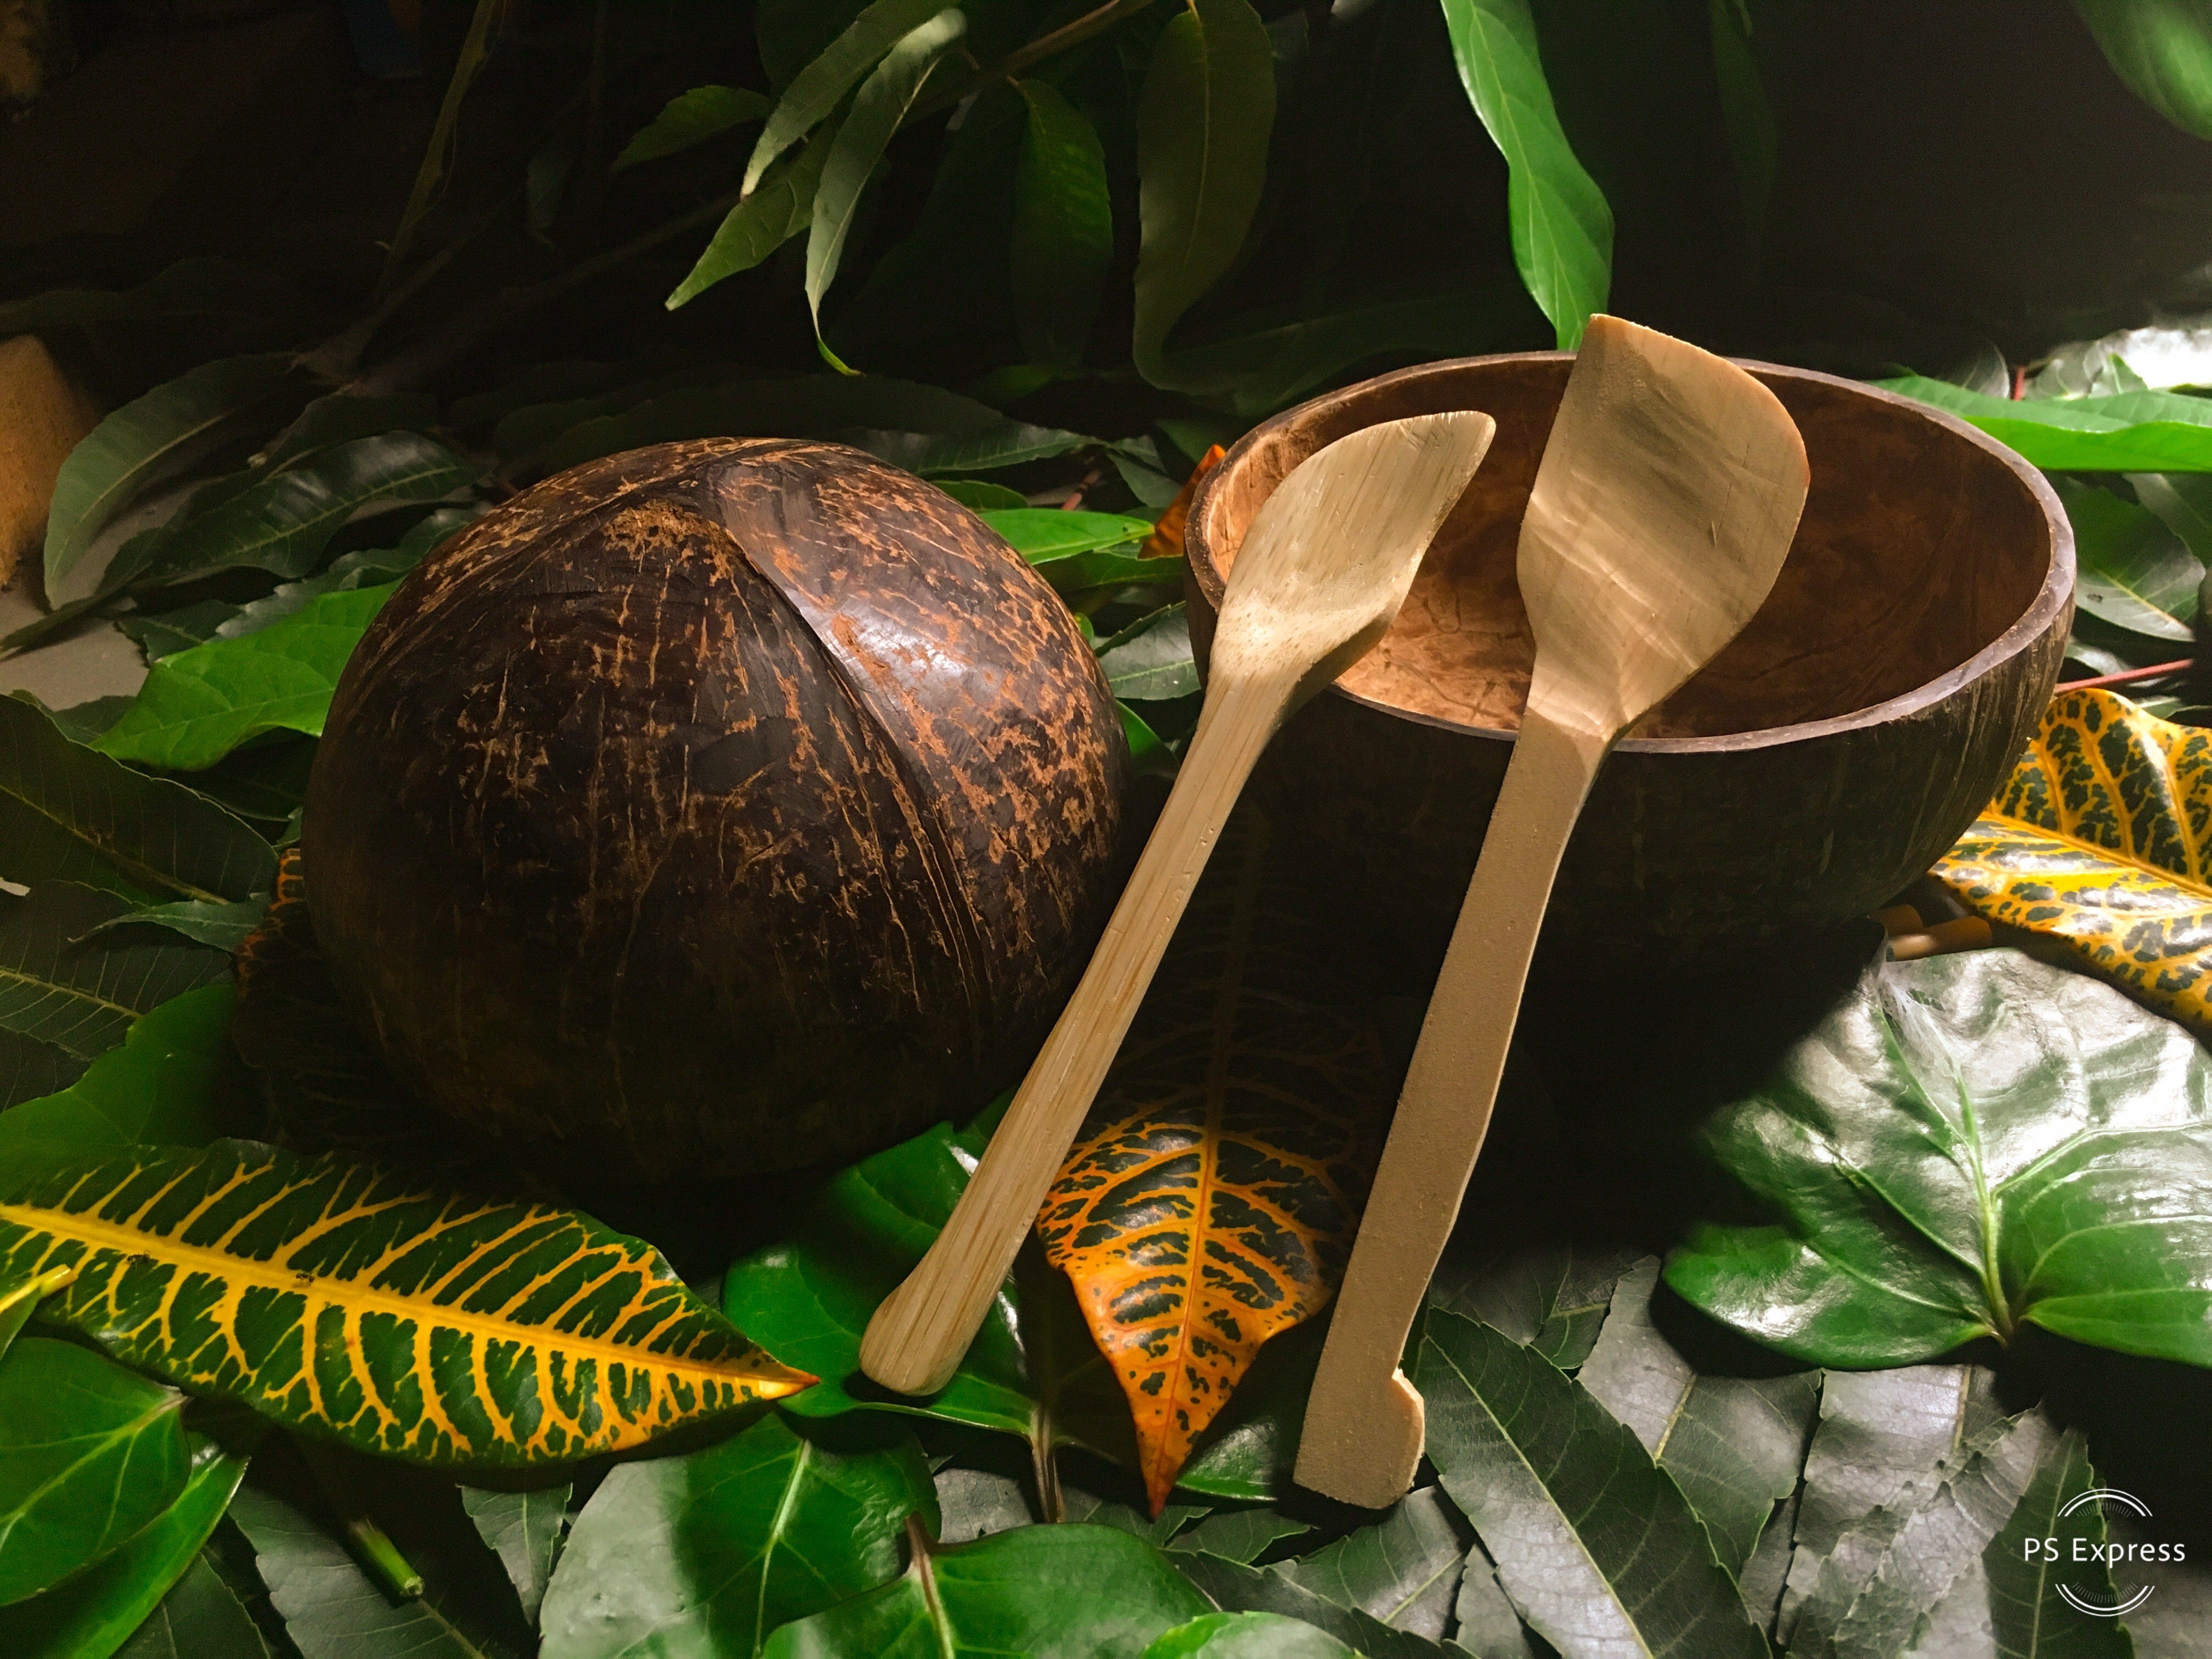 Organic Coconut bowl & spoon set - Ecofrenli.com